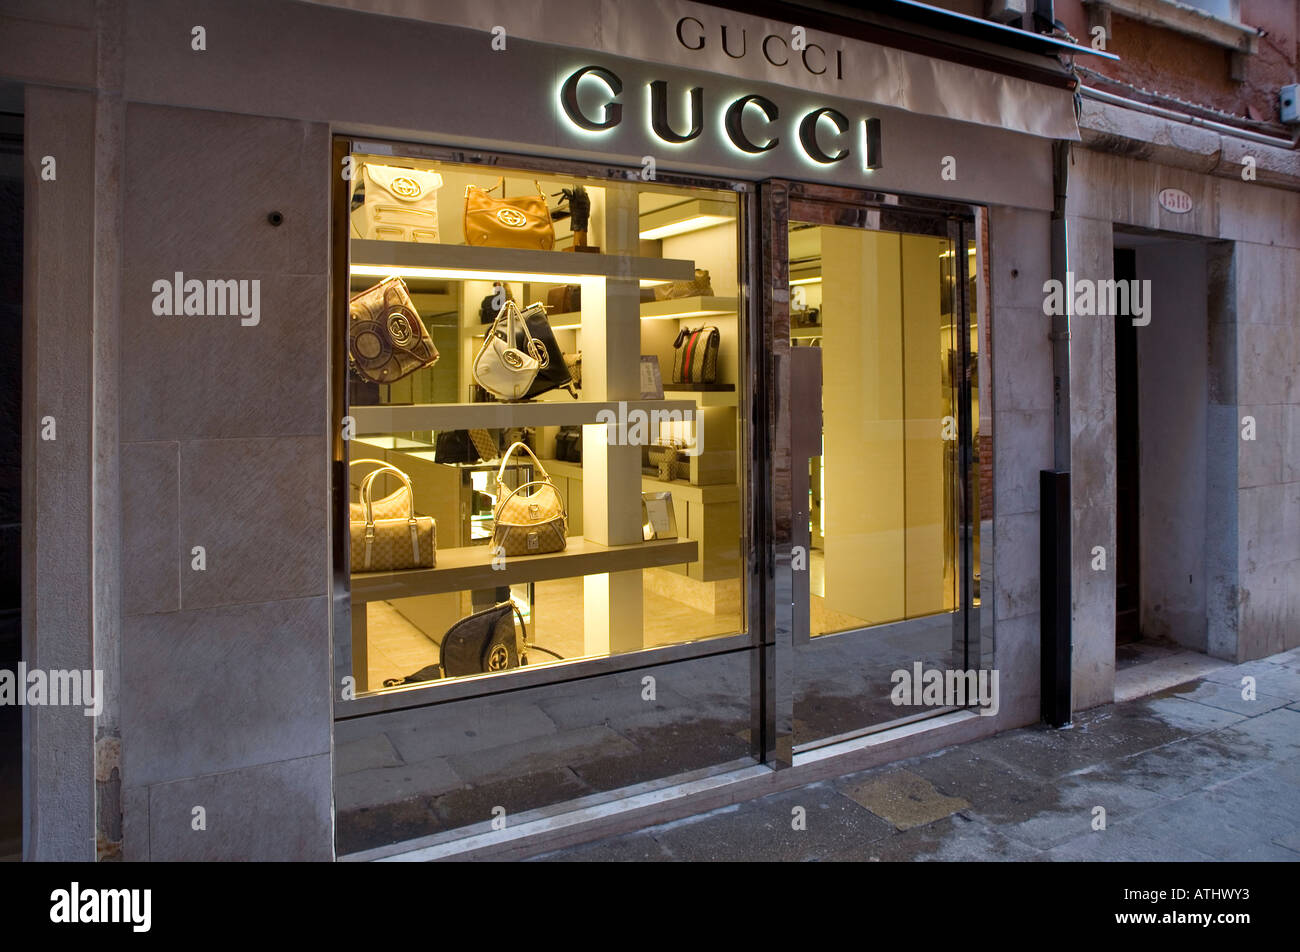 Gucci-Shop in Venedig Italien Stockfotografie - Alamy